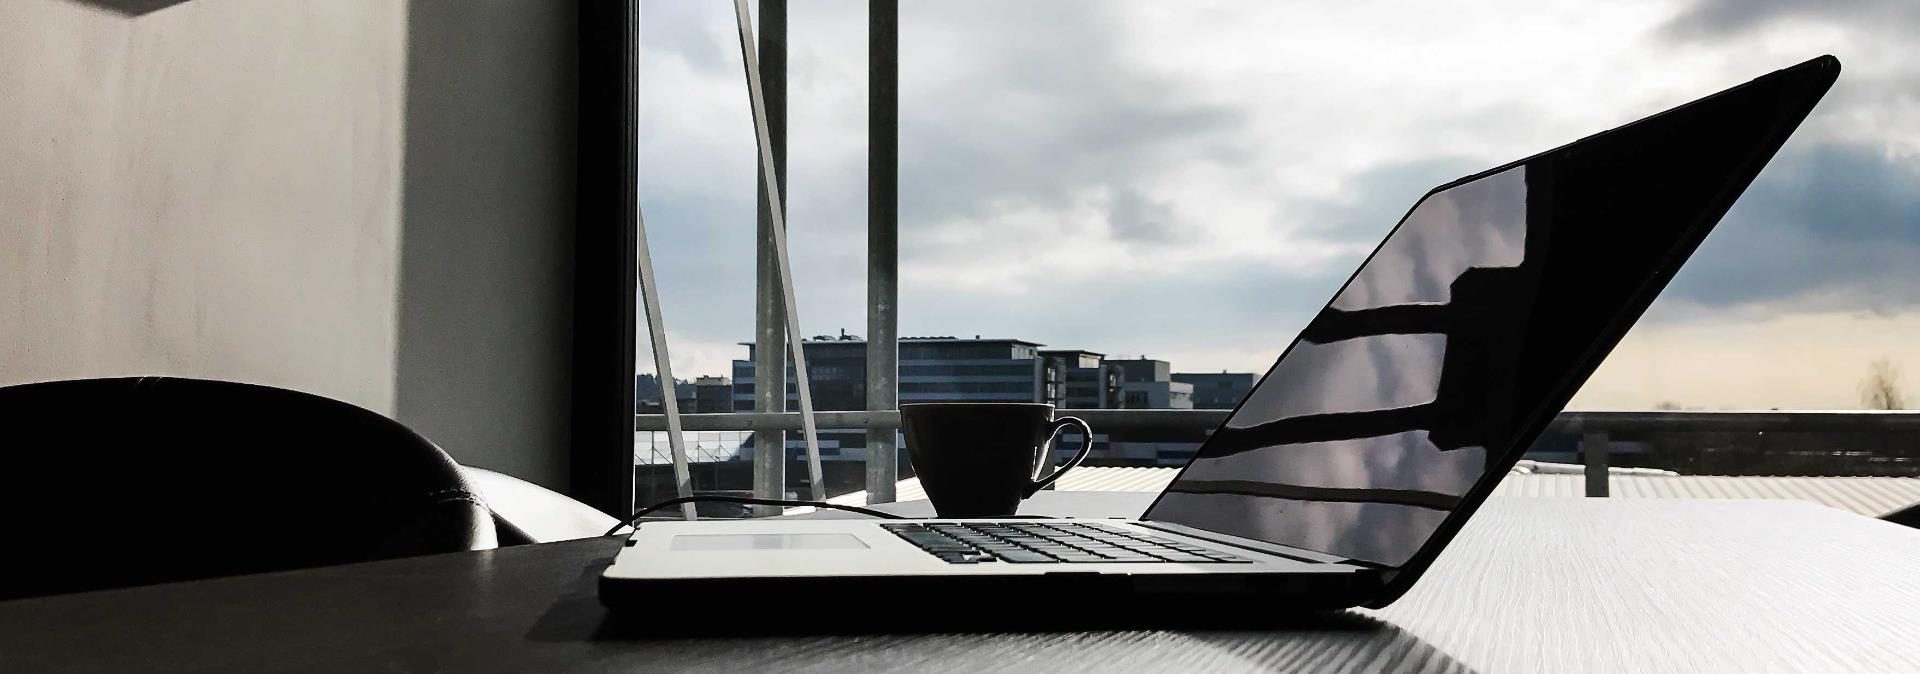 Caffè amaro e laptop